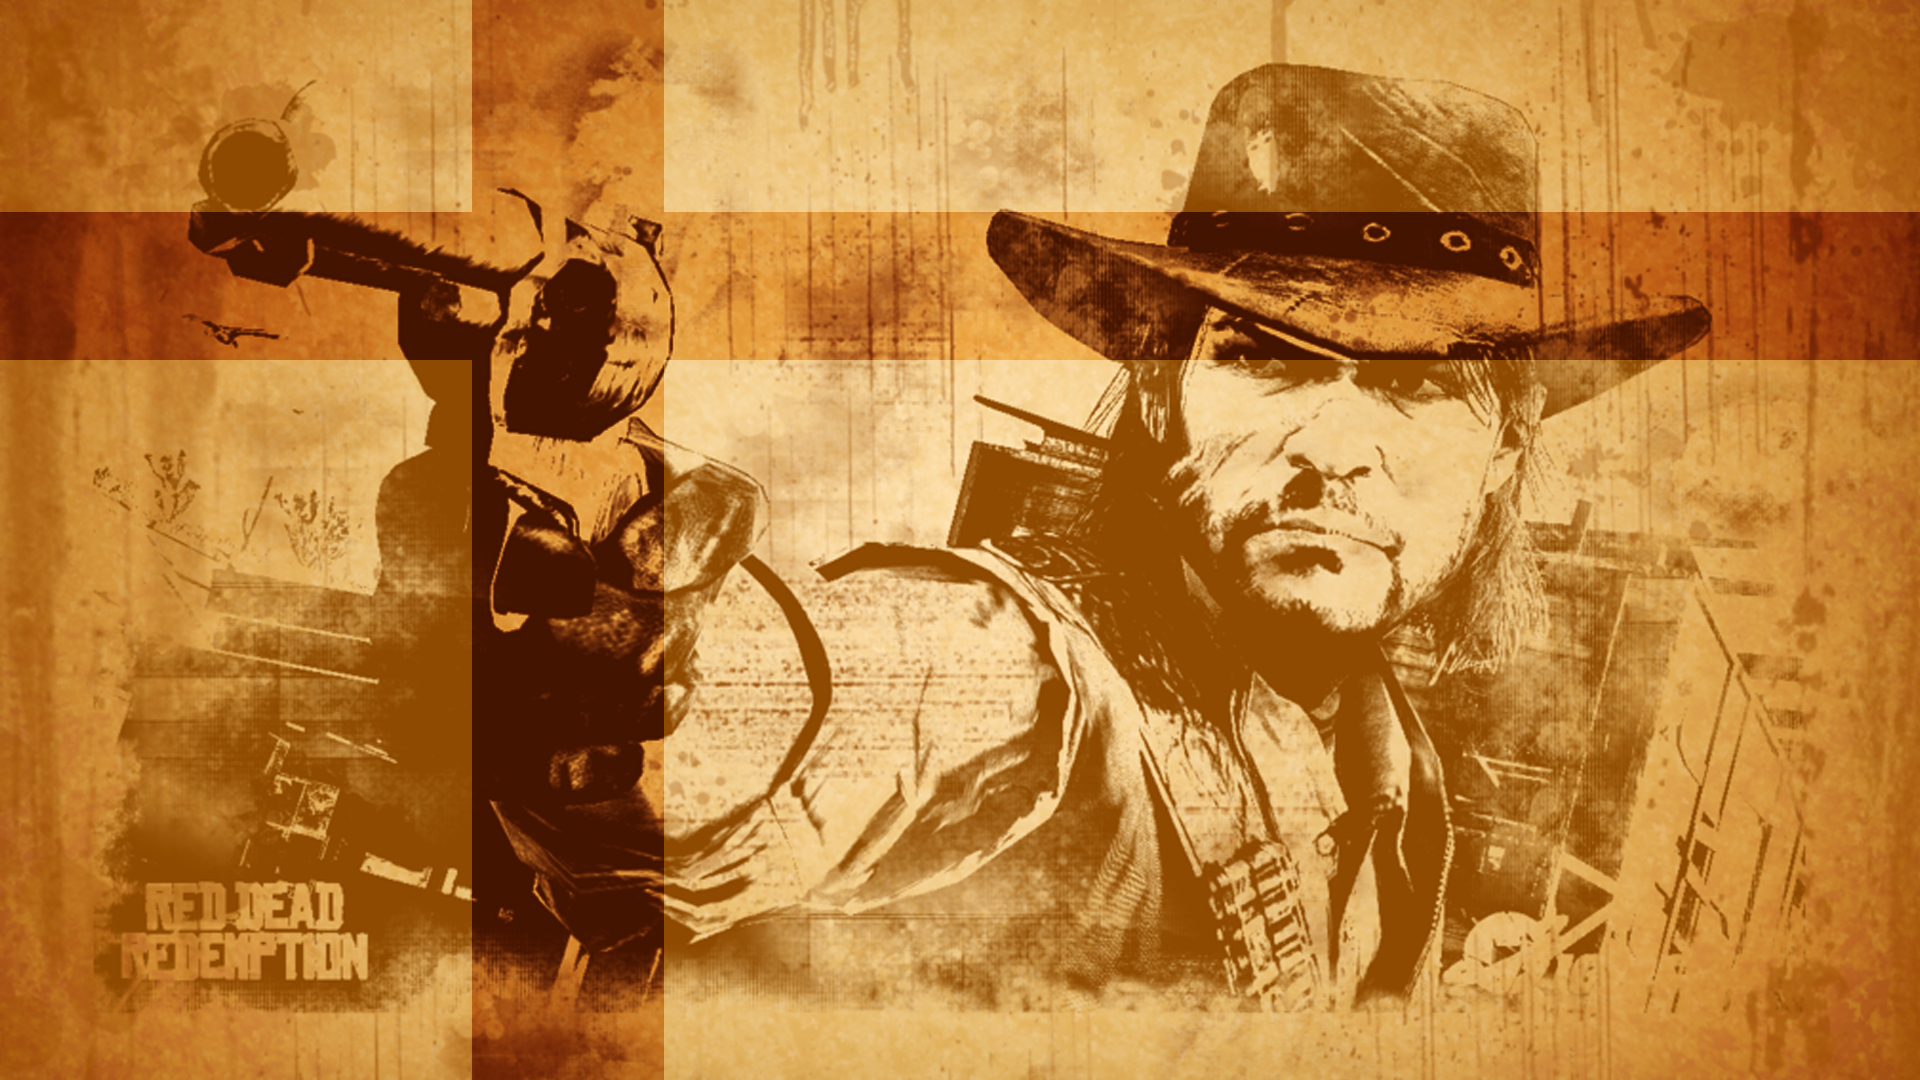 Wallpaper : Red Dead Redemption 2, Arthur Morgan, City 17 1920x1080 -  EKKO20 - 2233562 - HD Wallpapers - WallHere